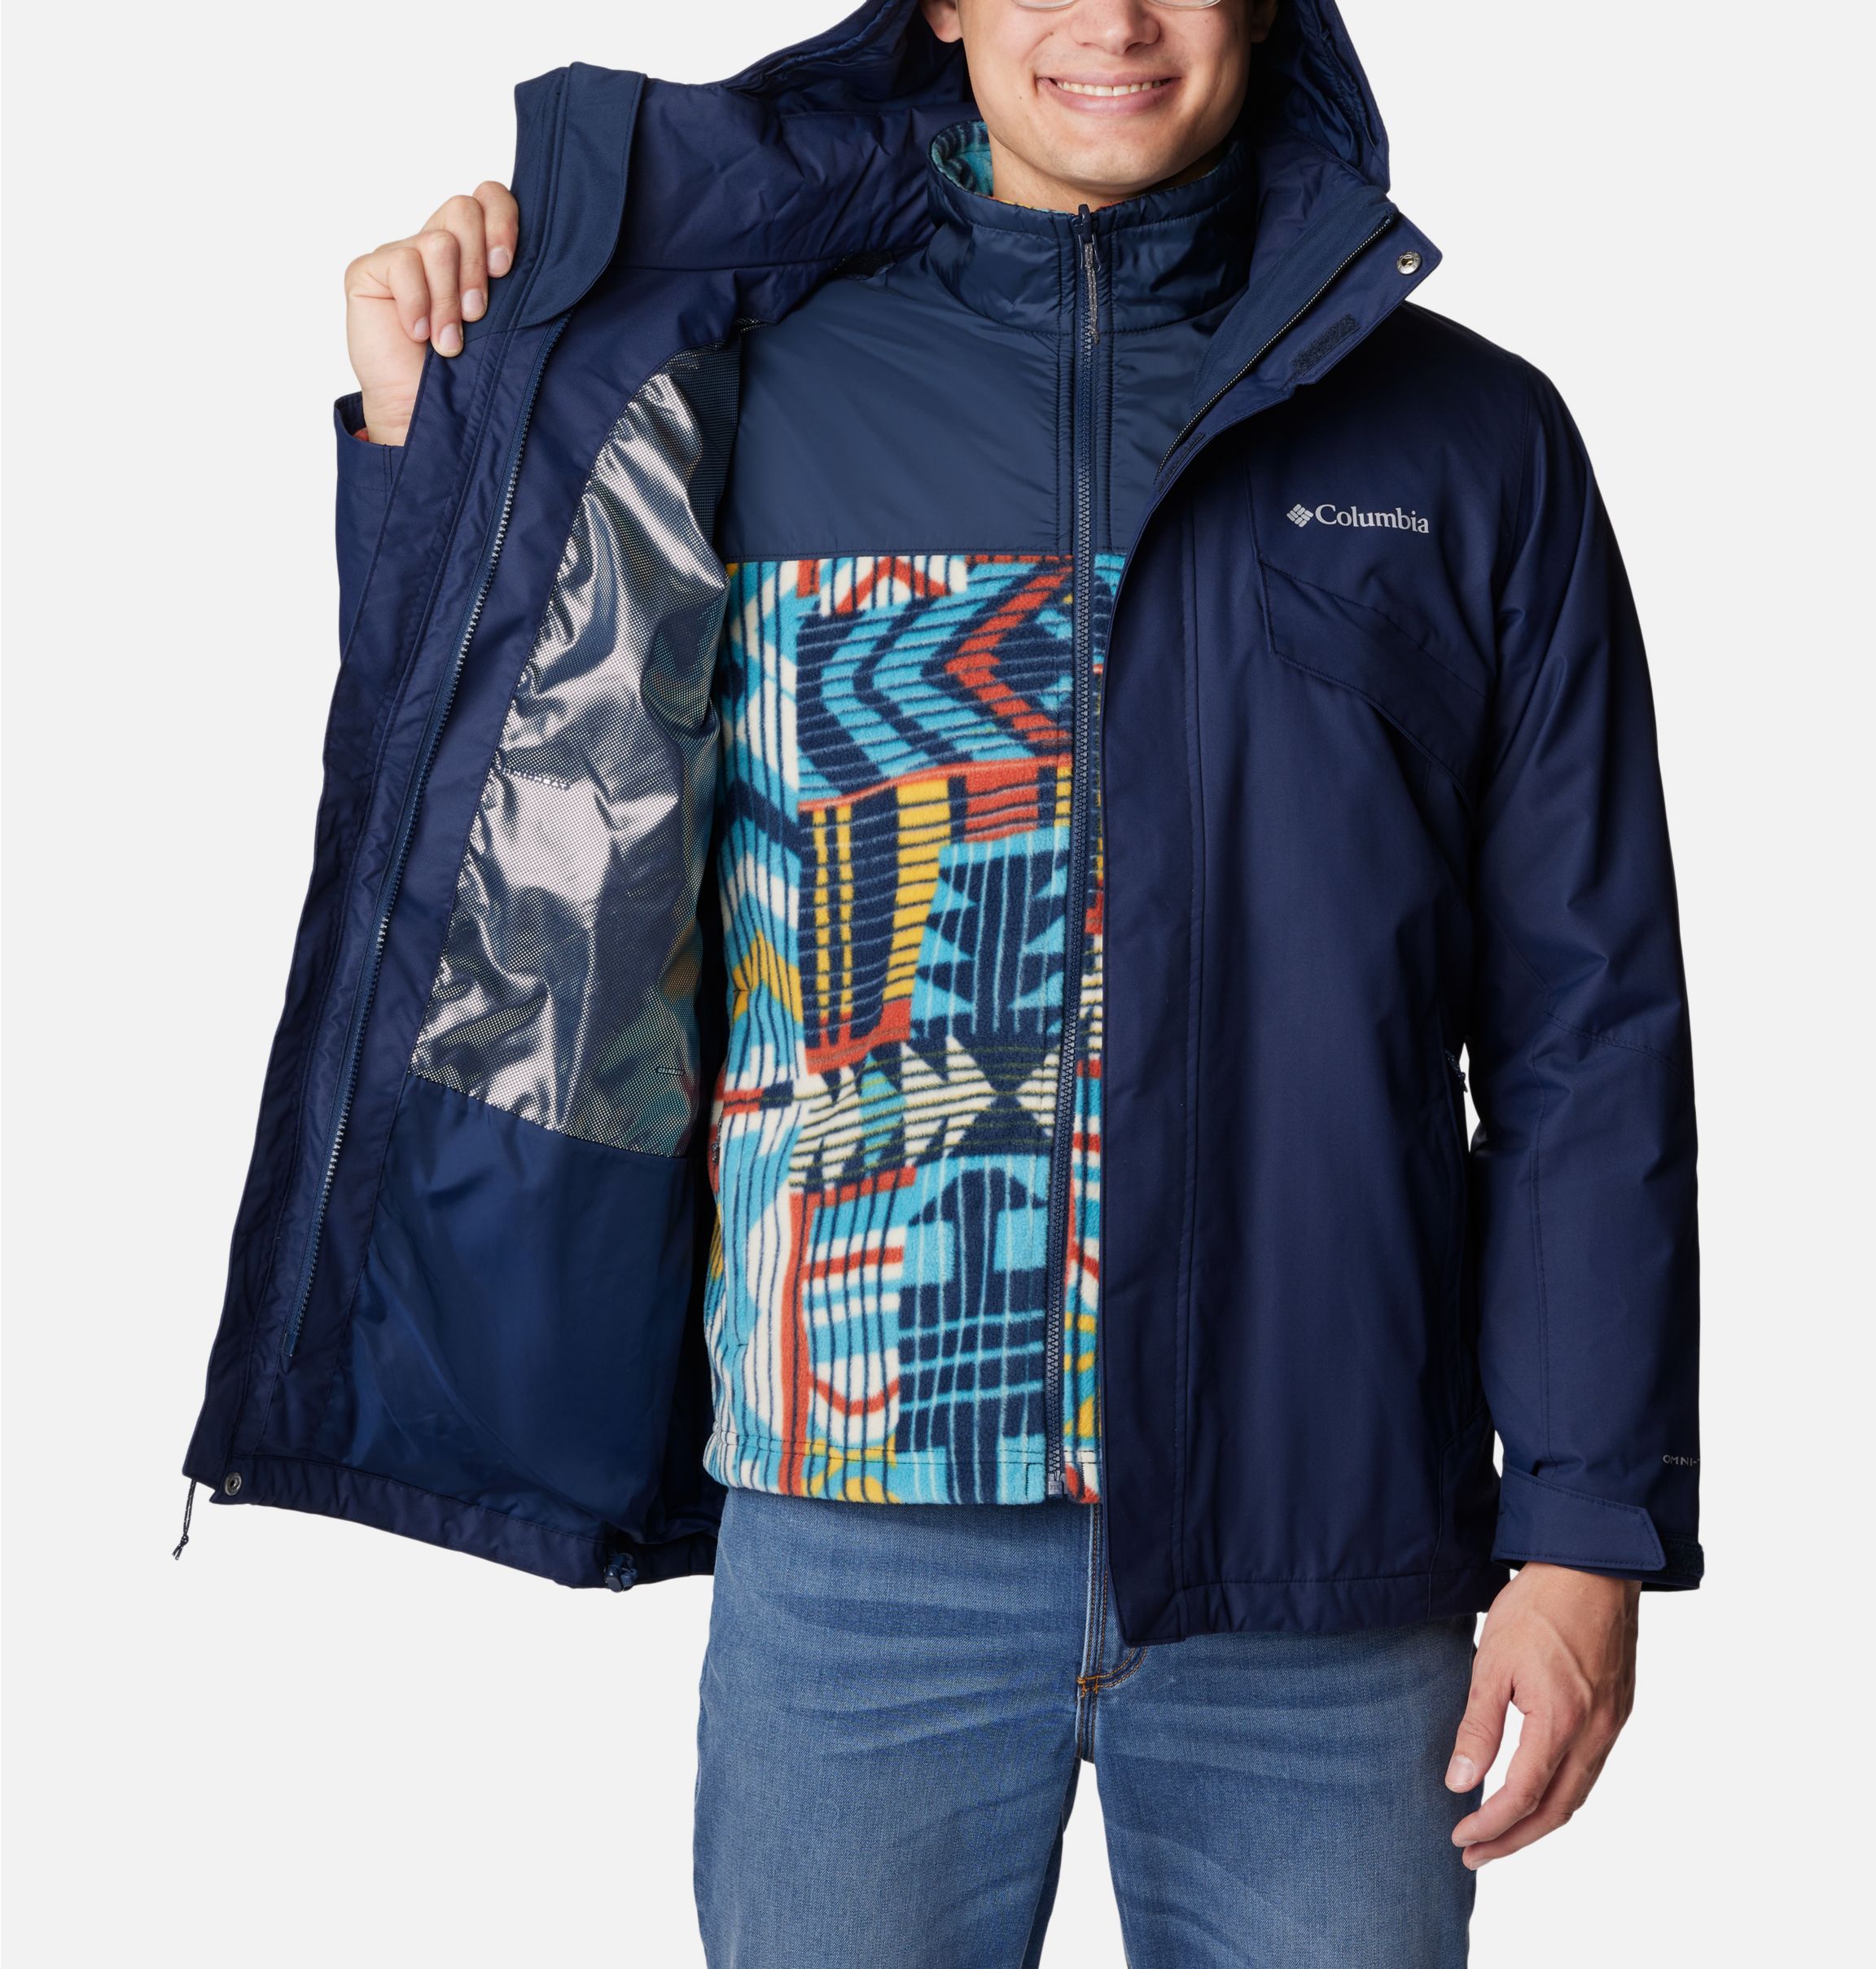 Columbia Men's Bugaboo II Fleece Interchange Jacket Size Large/Tall (LT)  Blue